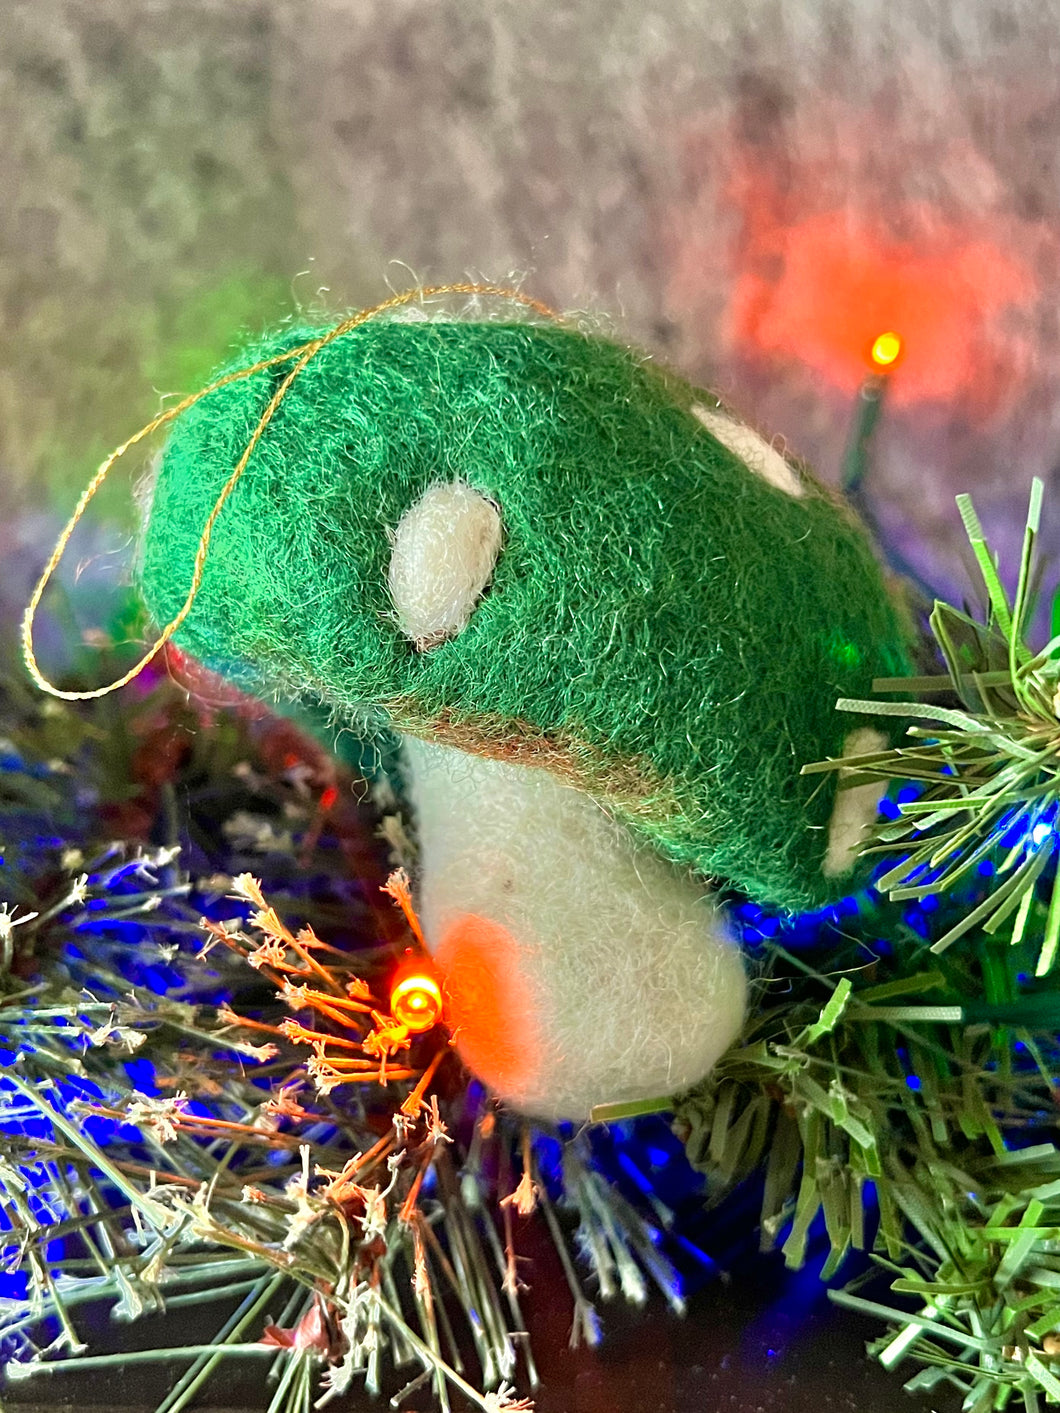 Green Felt Mushroom Ornament